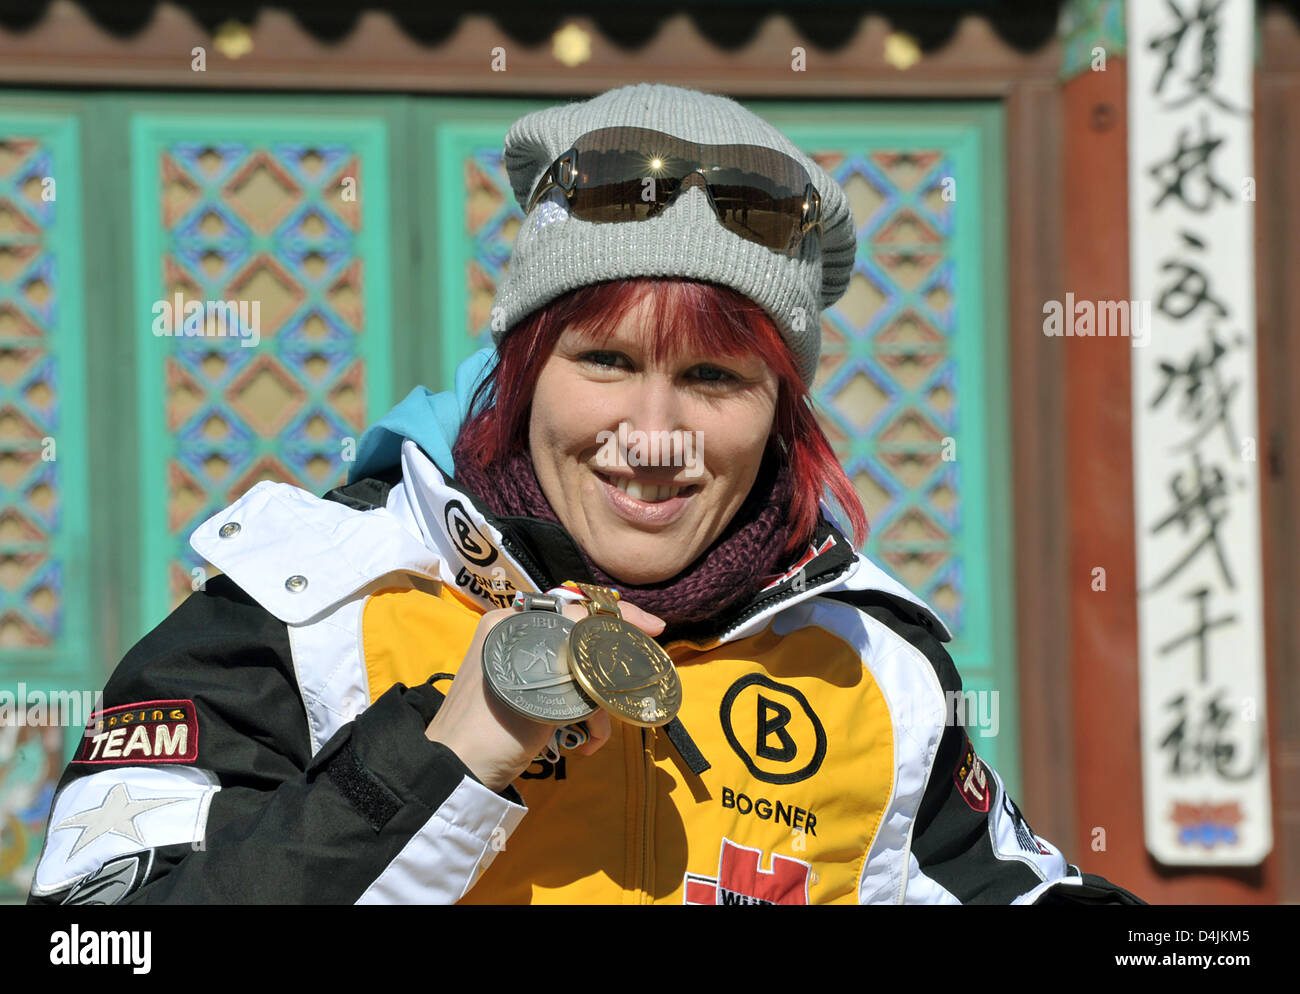 Biathlete kati wilhelm poses gold hi-res stock photography and images -  Alamy